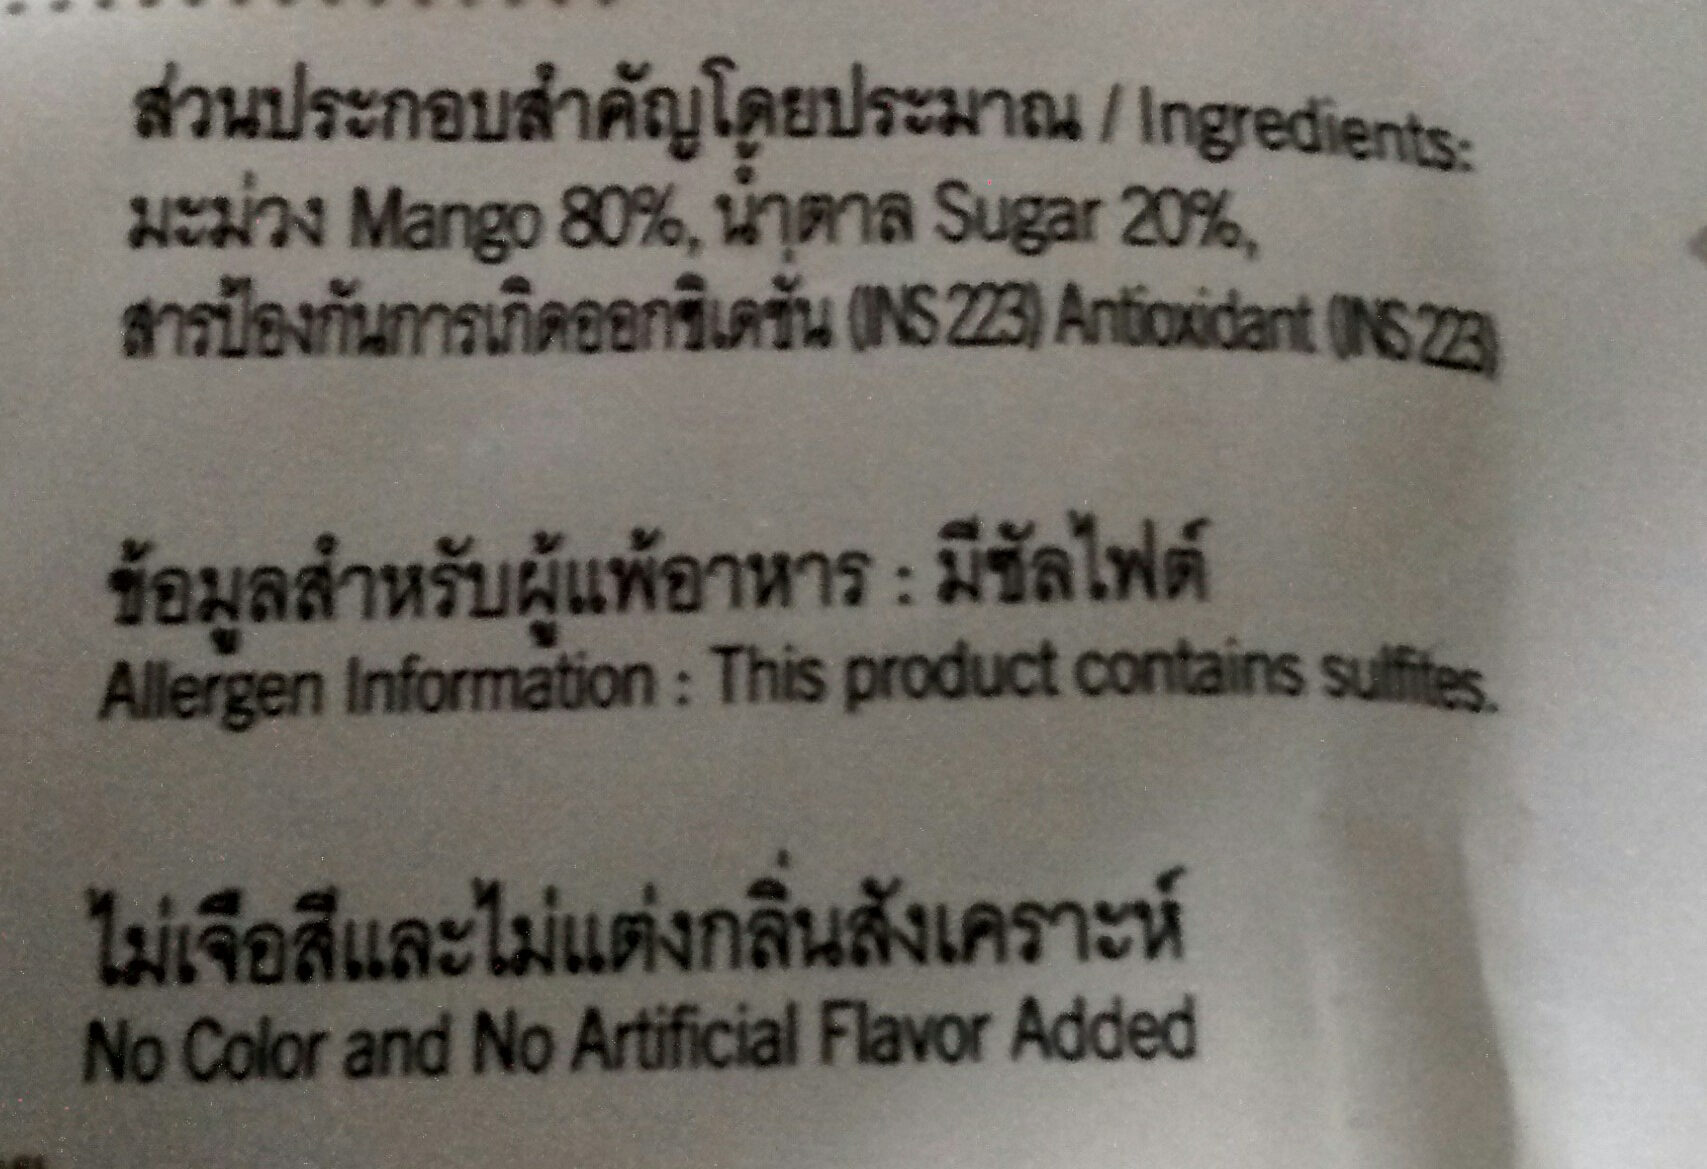 Dehydrated mango - Ingredients